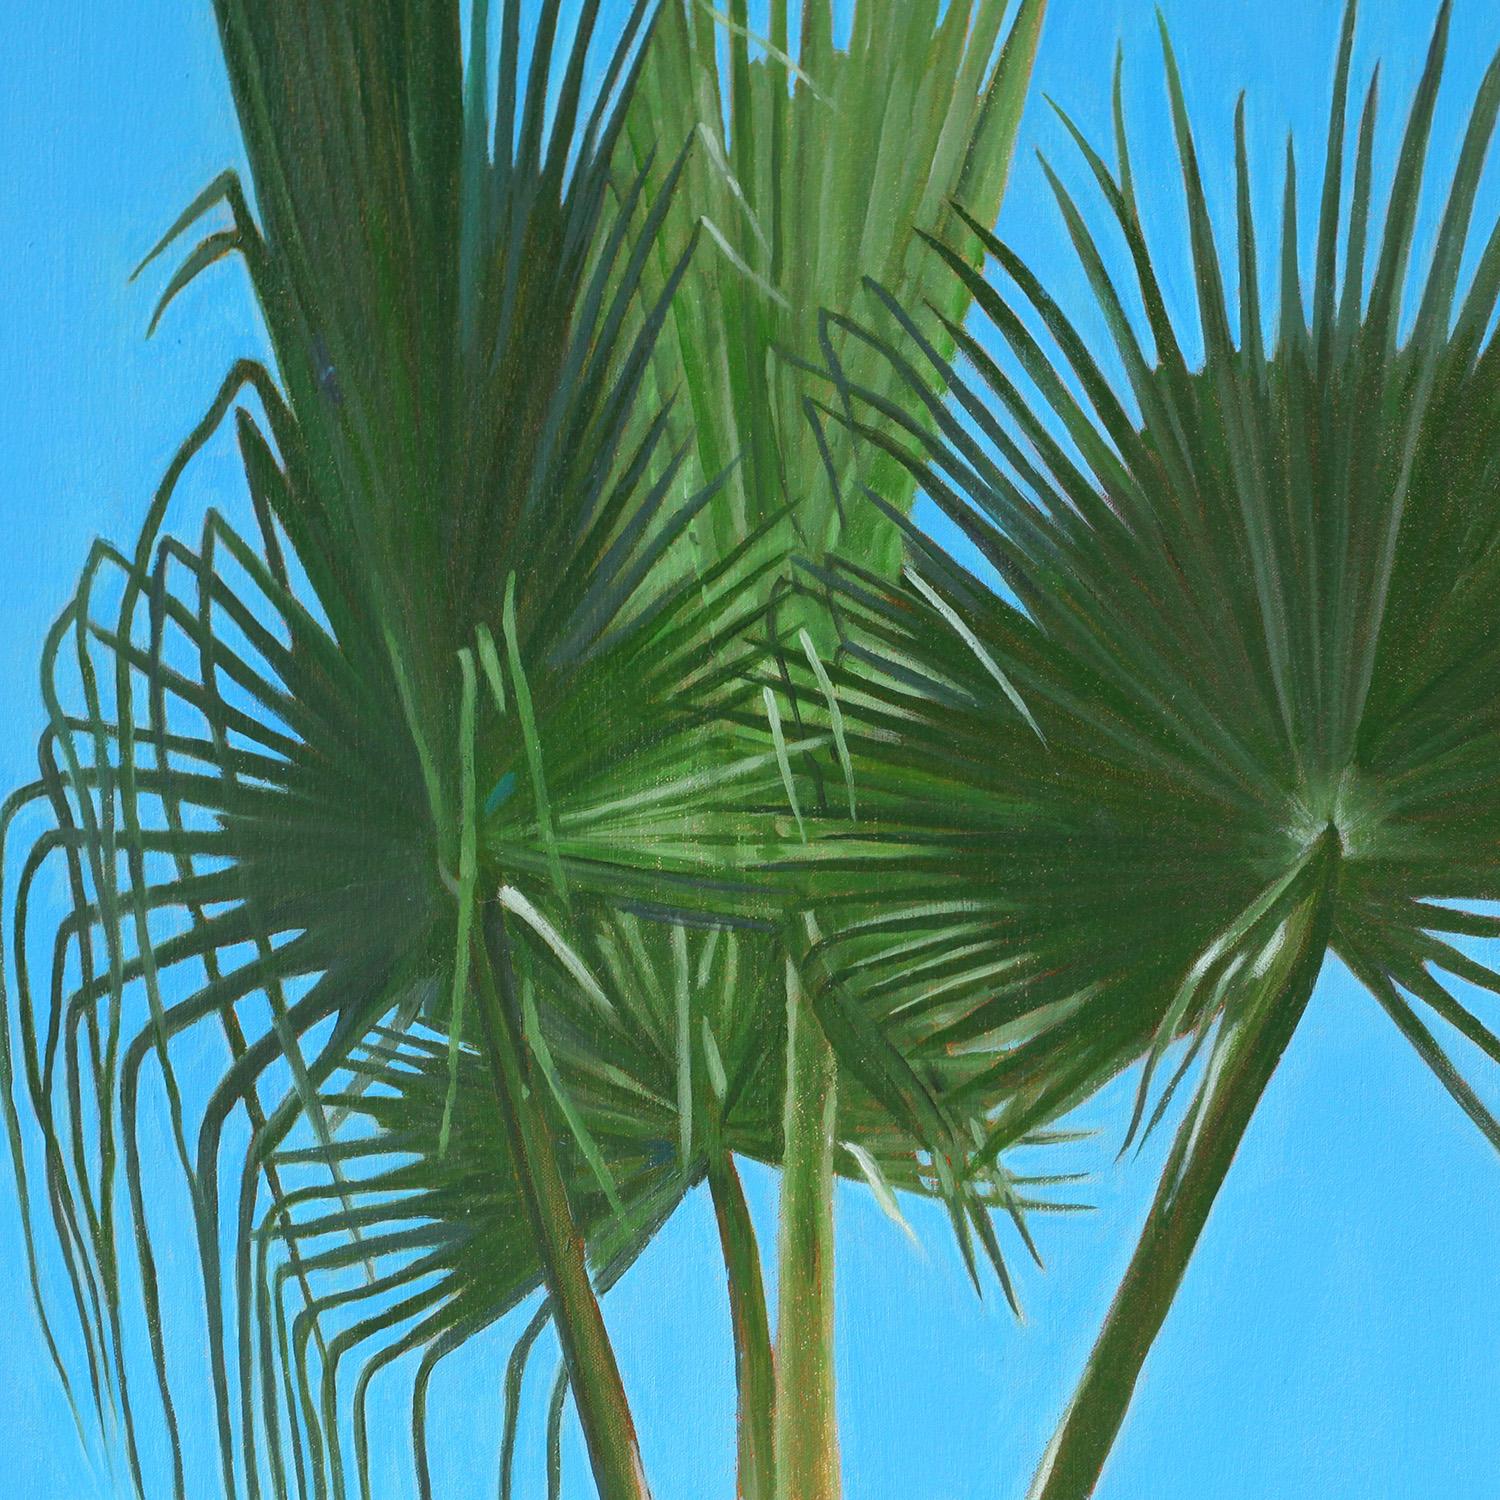 1/35 palm trees